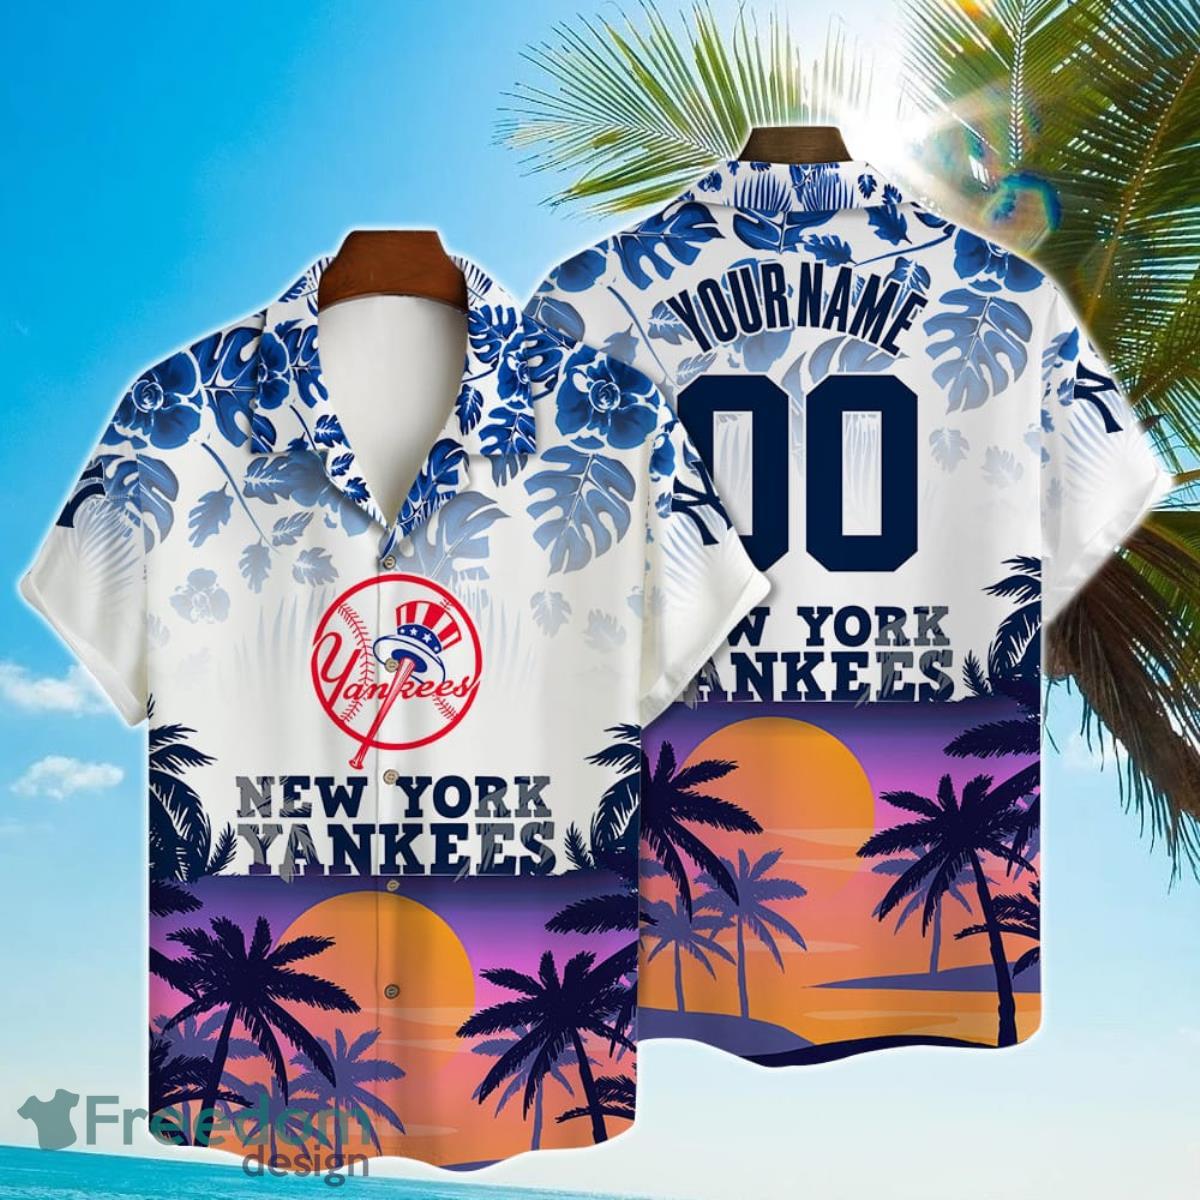 MLB Come To The Arizona Diamondbacks Side Star Wars Baseball Sports T Shirt  - Freedomdesign